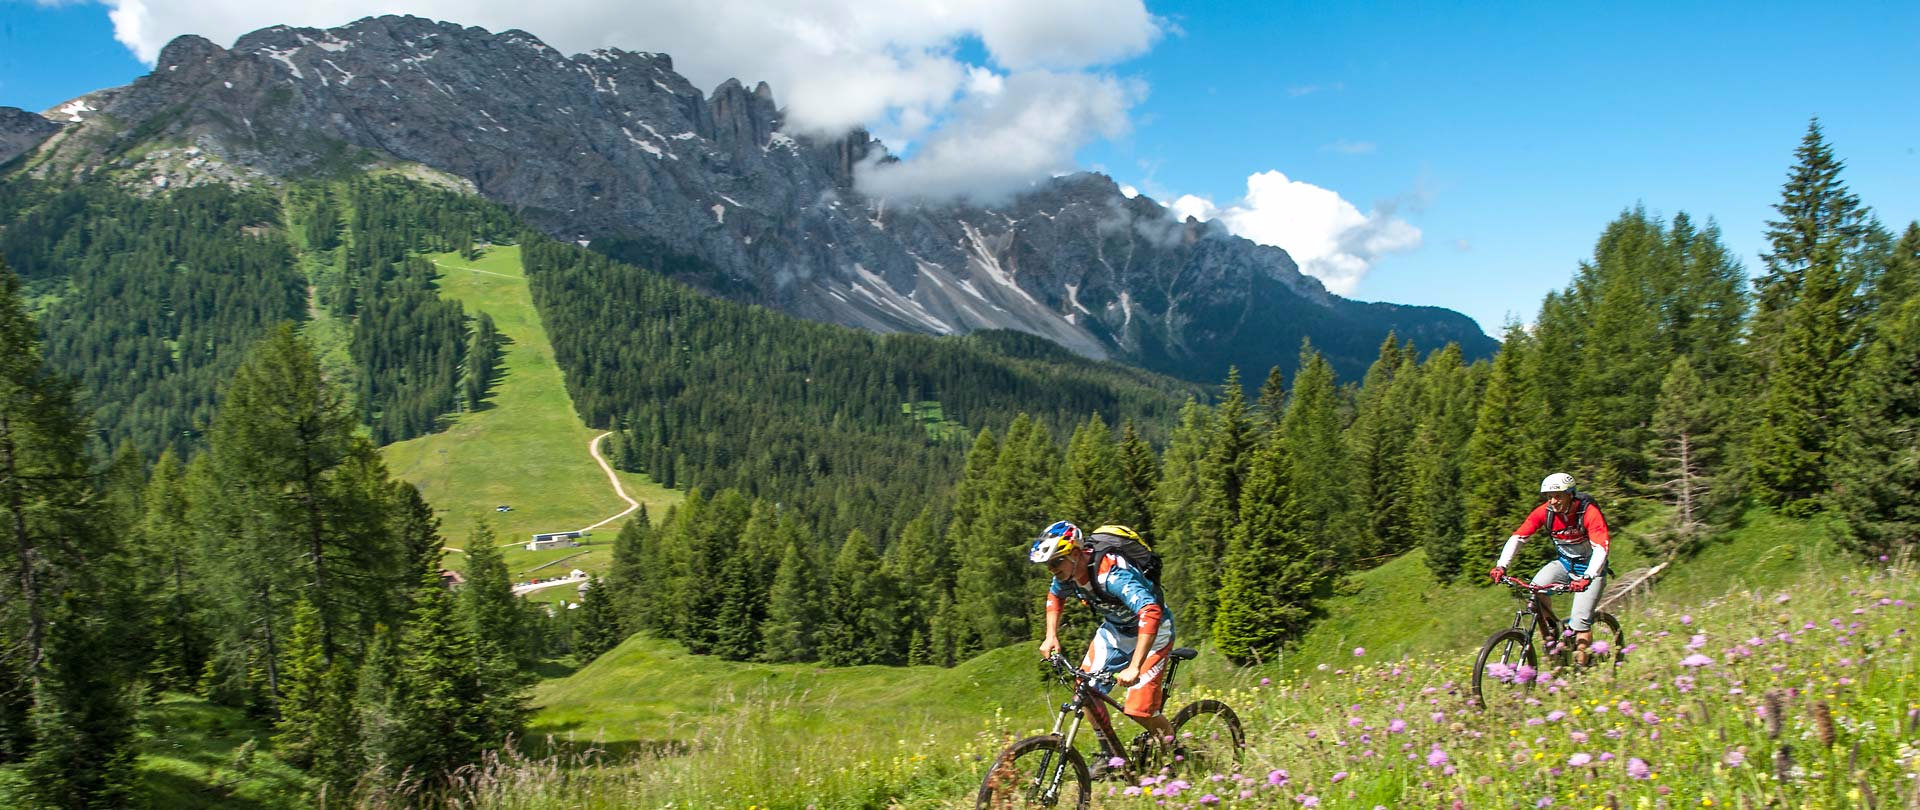 Val d’Ega, paradiso della mountain bike